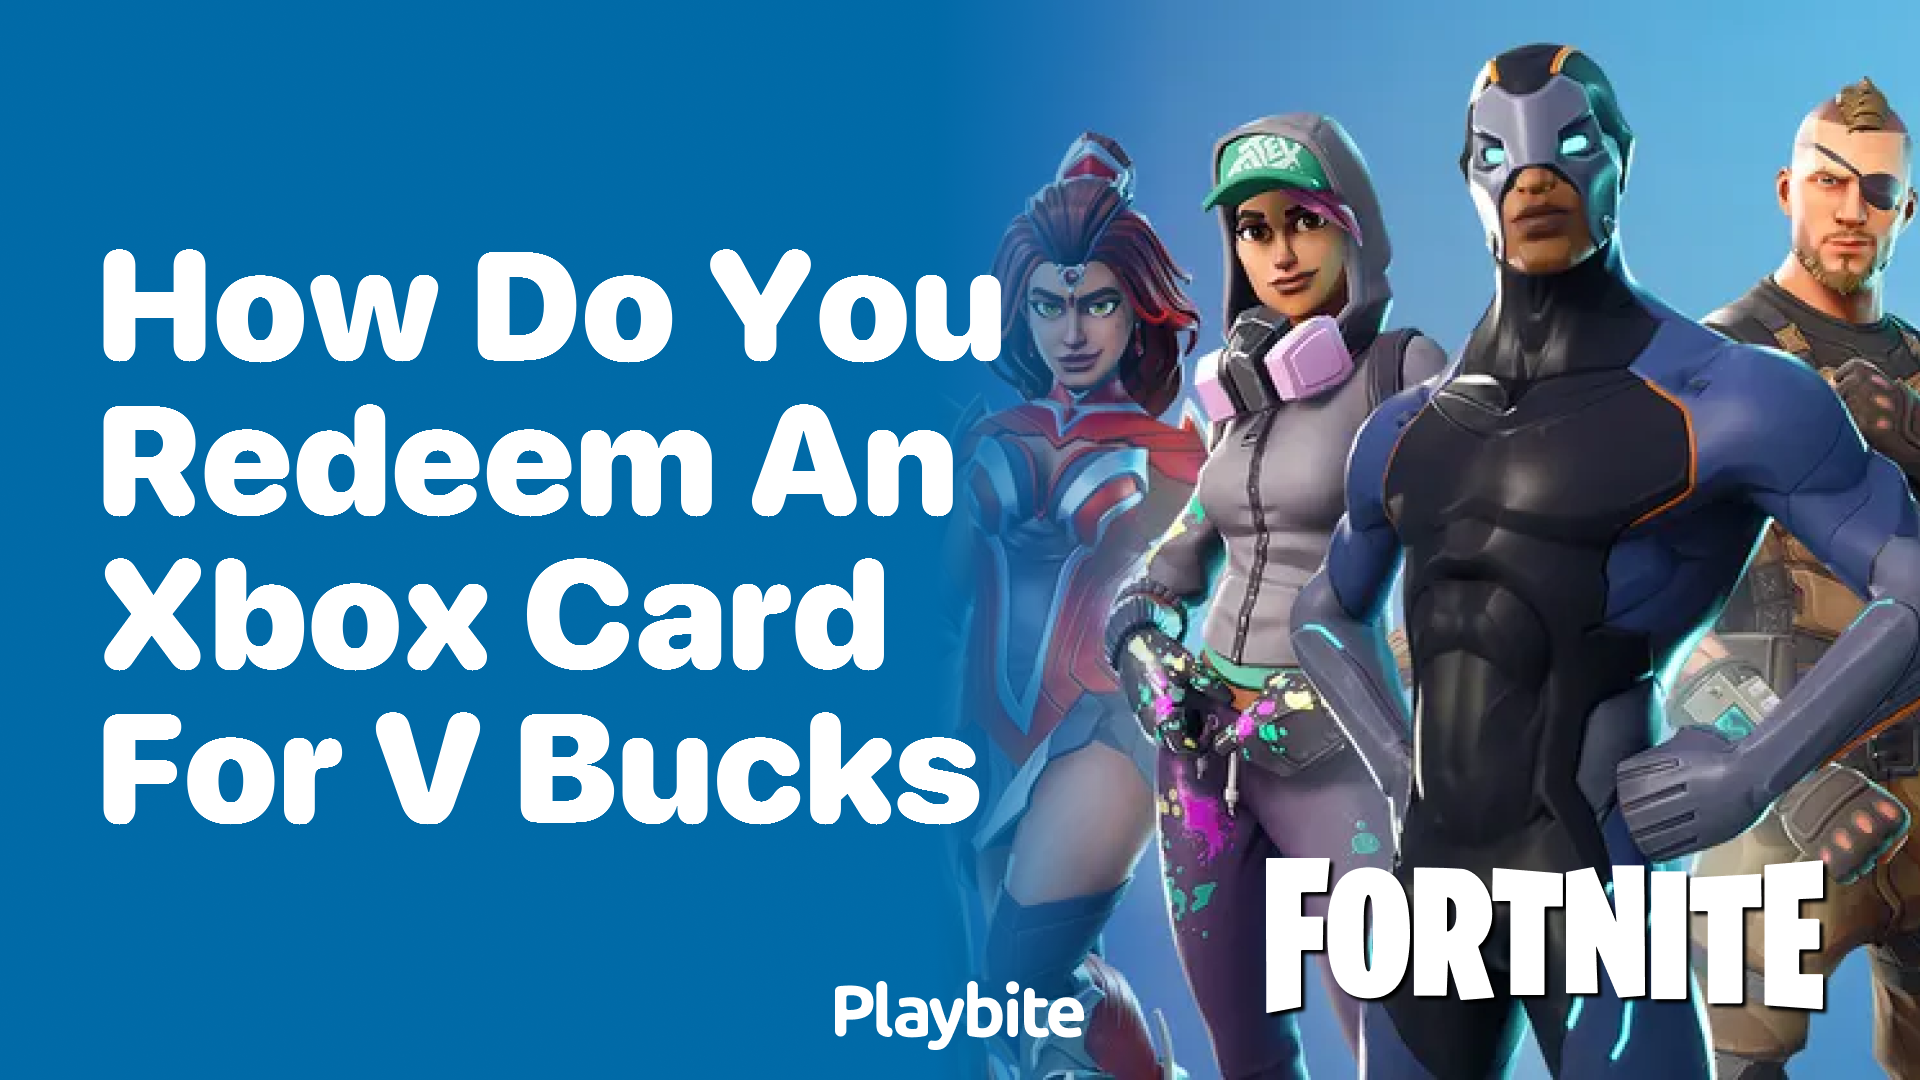 How Do You Redeem an Xbox Card for V-Bucks?